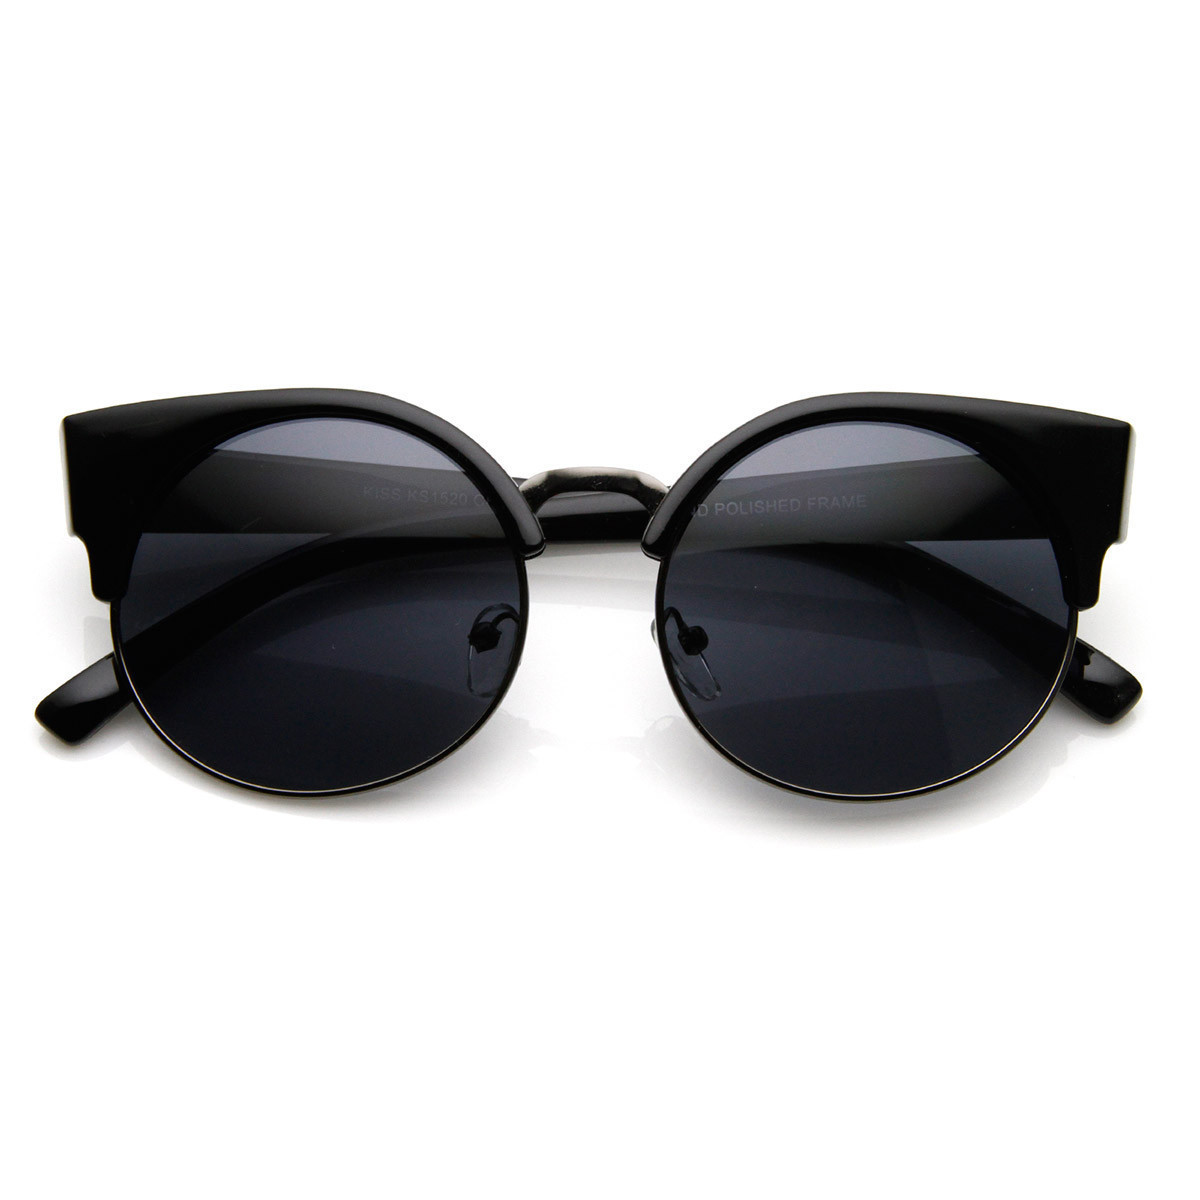 Round Circle Half Frame Semi-Rimless Cateye Sunglasses - 8785 - Black-Gold